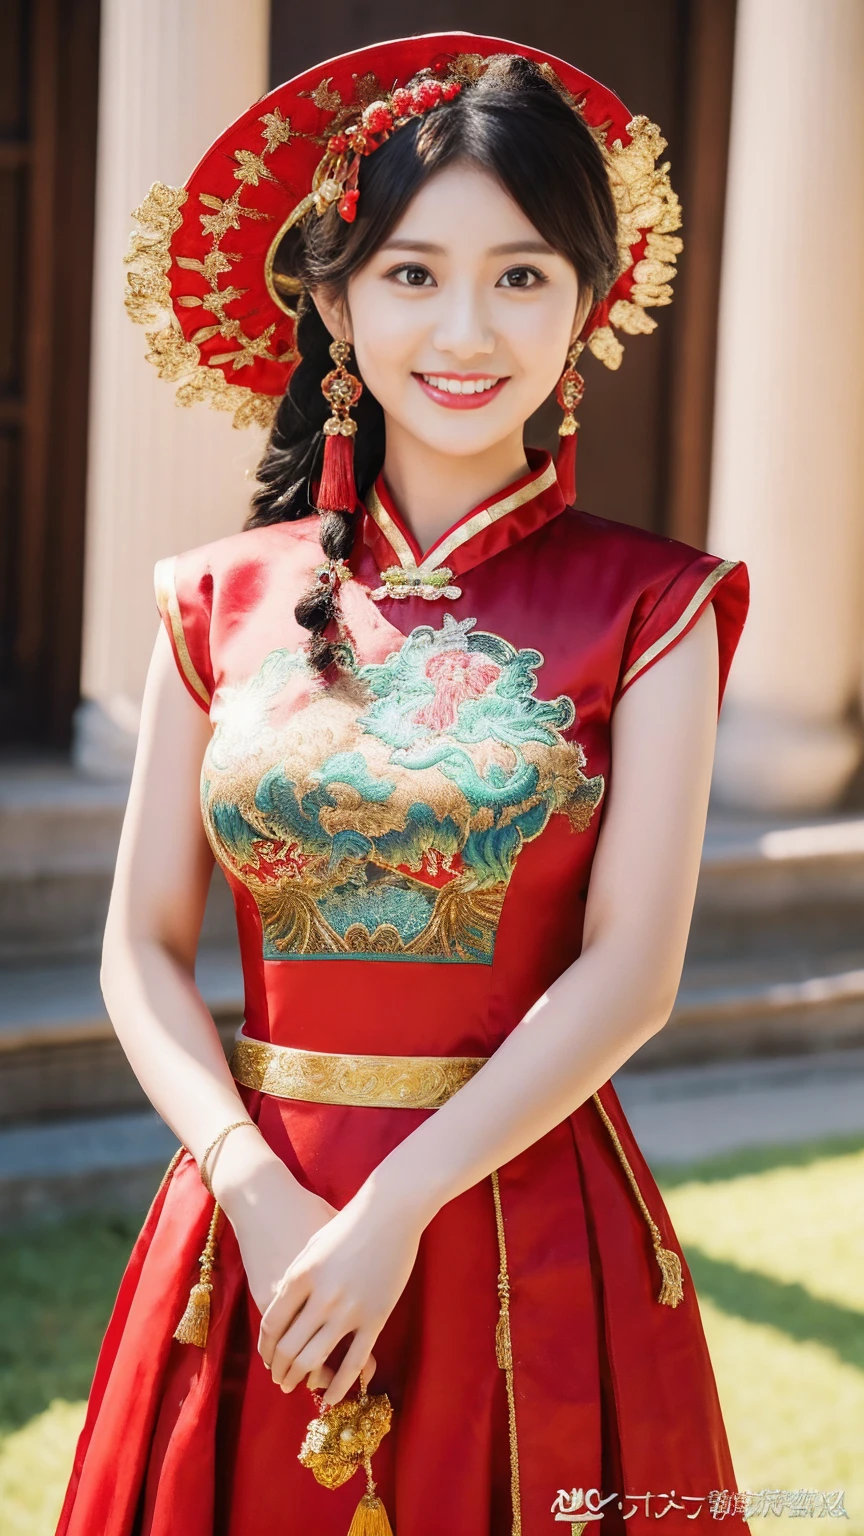 (8K, RAW 사진, 최상의 품질, 걸작: 1.2), ((큰 가슴:1.2)),(현실적인, 현실적인: 1.37), 소녀 1명, 빨간 드레스와 머리 장식을 착용、사진을 찍는 여성, 화려한 역할극, 아름다운 의상, 중국 드레스, 복잡한 드레스, 복잡한 의상, 전통미, 화려한 중국 모델, 중국 의상, 고급스러운 의상을 입고, 우아한 중국 슈허 의상을 입고, 중국 웨딩드레스, 피닉스 왕관 여름 매달려, 골동품 신부, Hidekazu Costume, 닫다, 피닉스 왕관 착용, 웃다, 워터마크 없음, 드래곤 앤 피닉스 자수 드레스, 중간 가슴